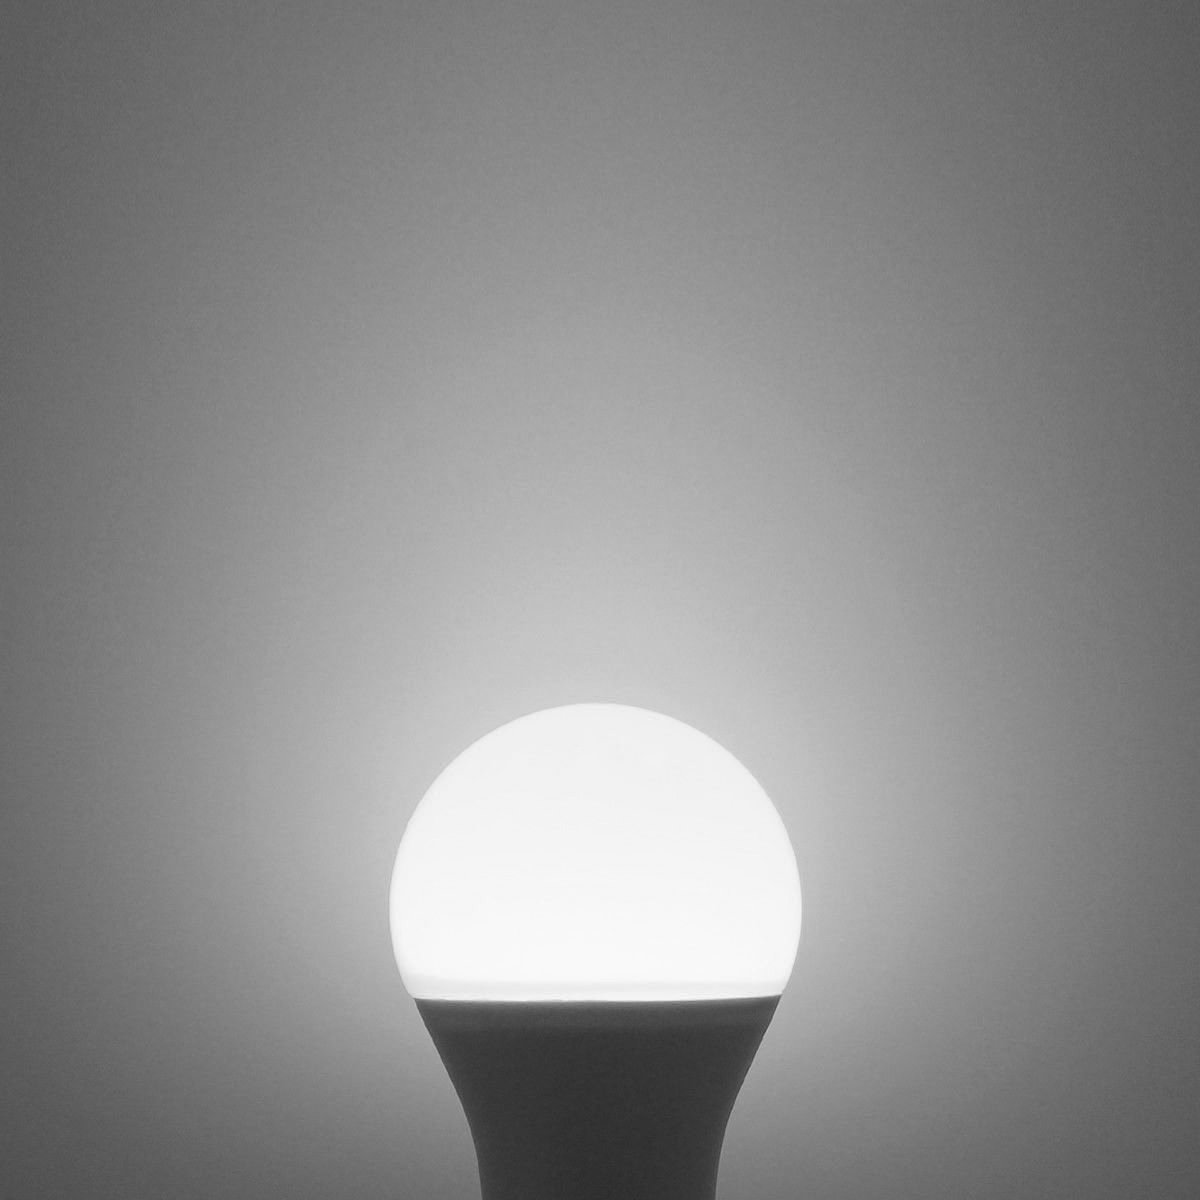 G.W.S LED Wholesale LED Bulbs B22 / 9W / Day White (6500K) B22 Bayonet LED Globe Light Bulb